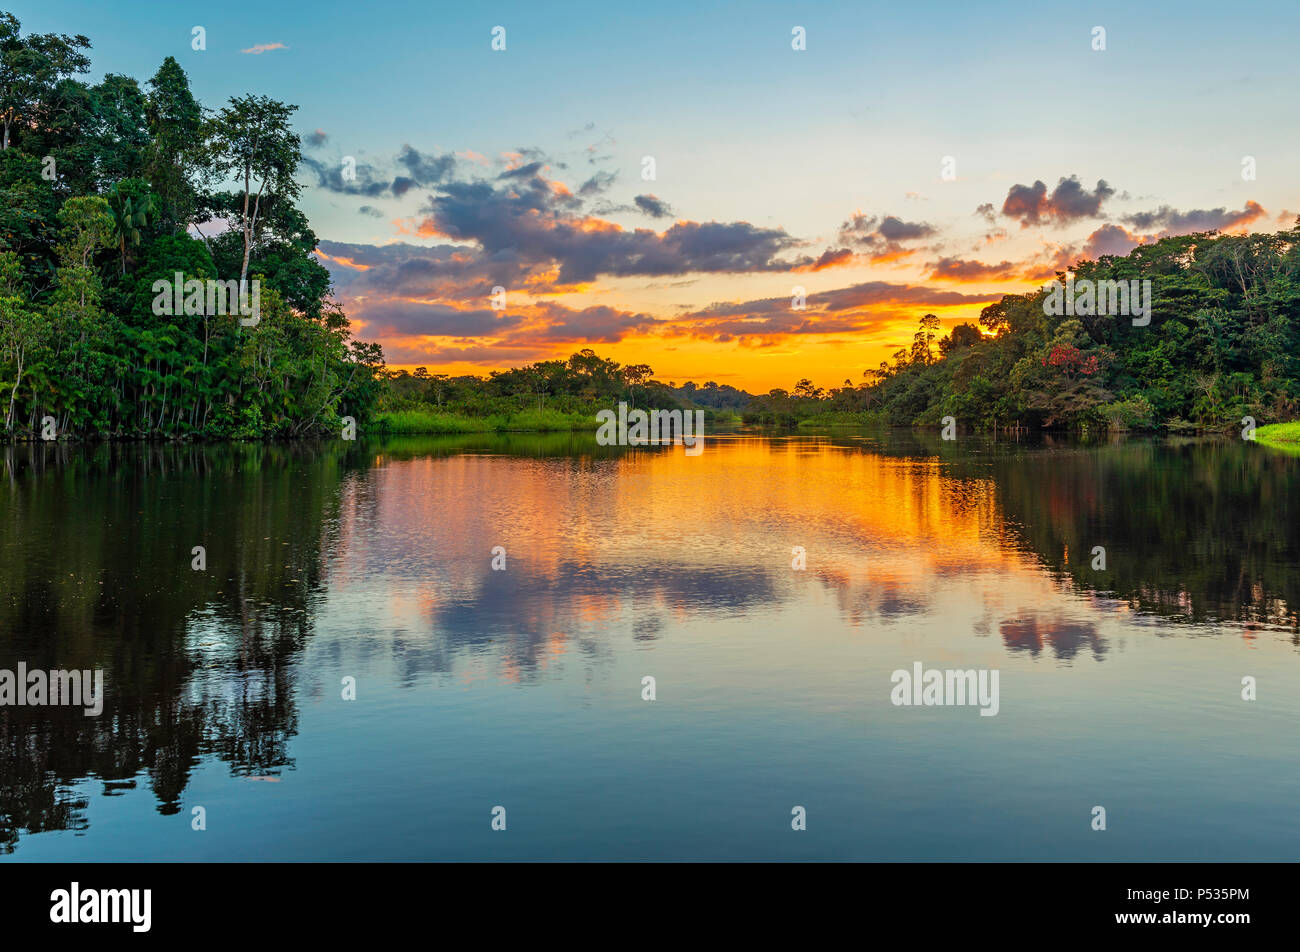 Reflection of a sunset in the Amazon Rainforest Basin. Countries of Brazil, Bolivia, Colombia, Ecuador, Peru, Venezuela, Guyana and Suriname. Stock Photo